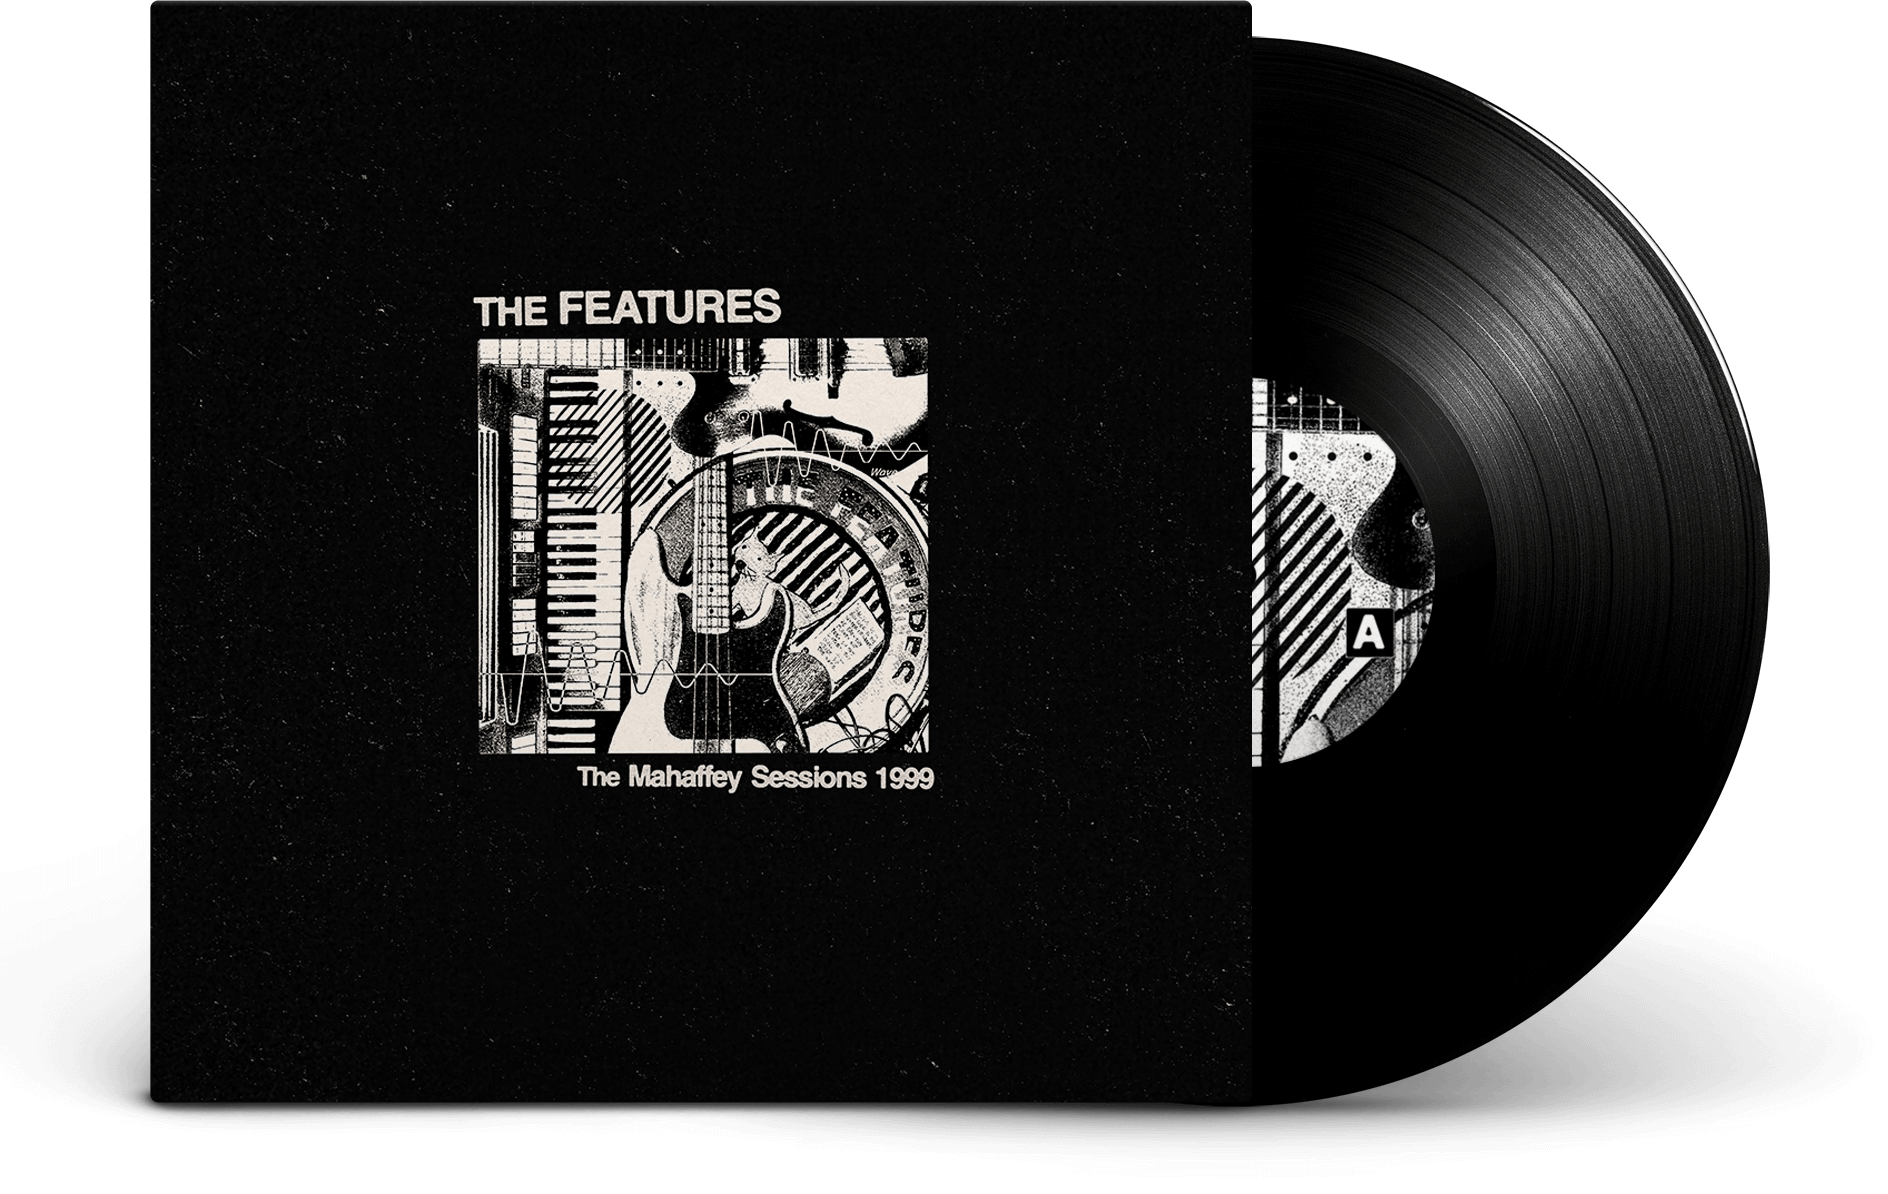 The Mahaffey Sessions 1999 vinyl